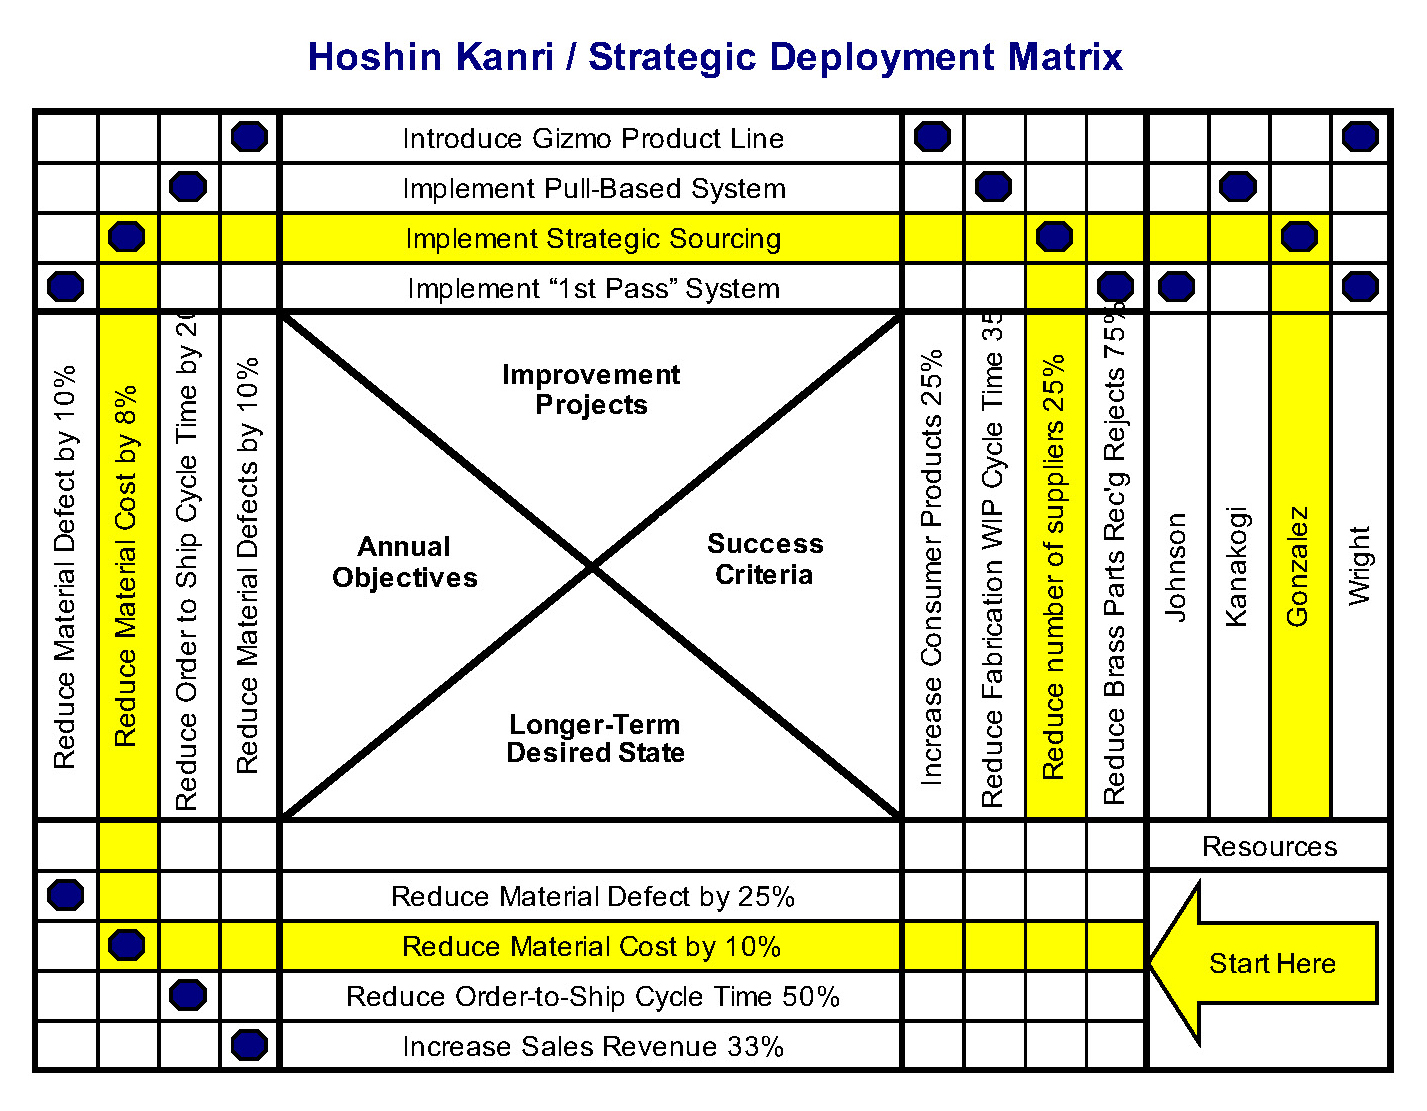 Hoshin Planning Model Template